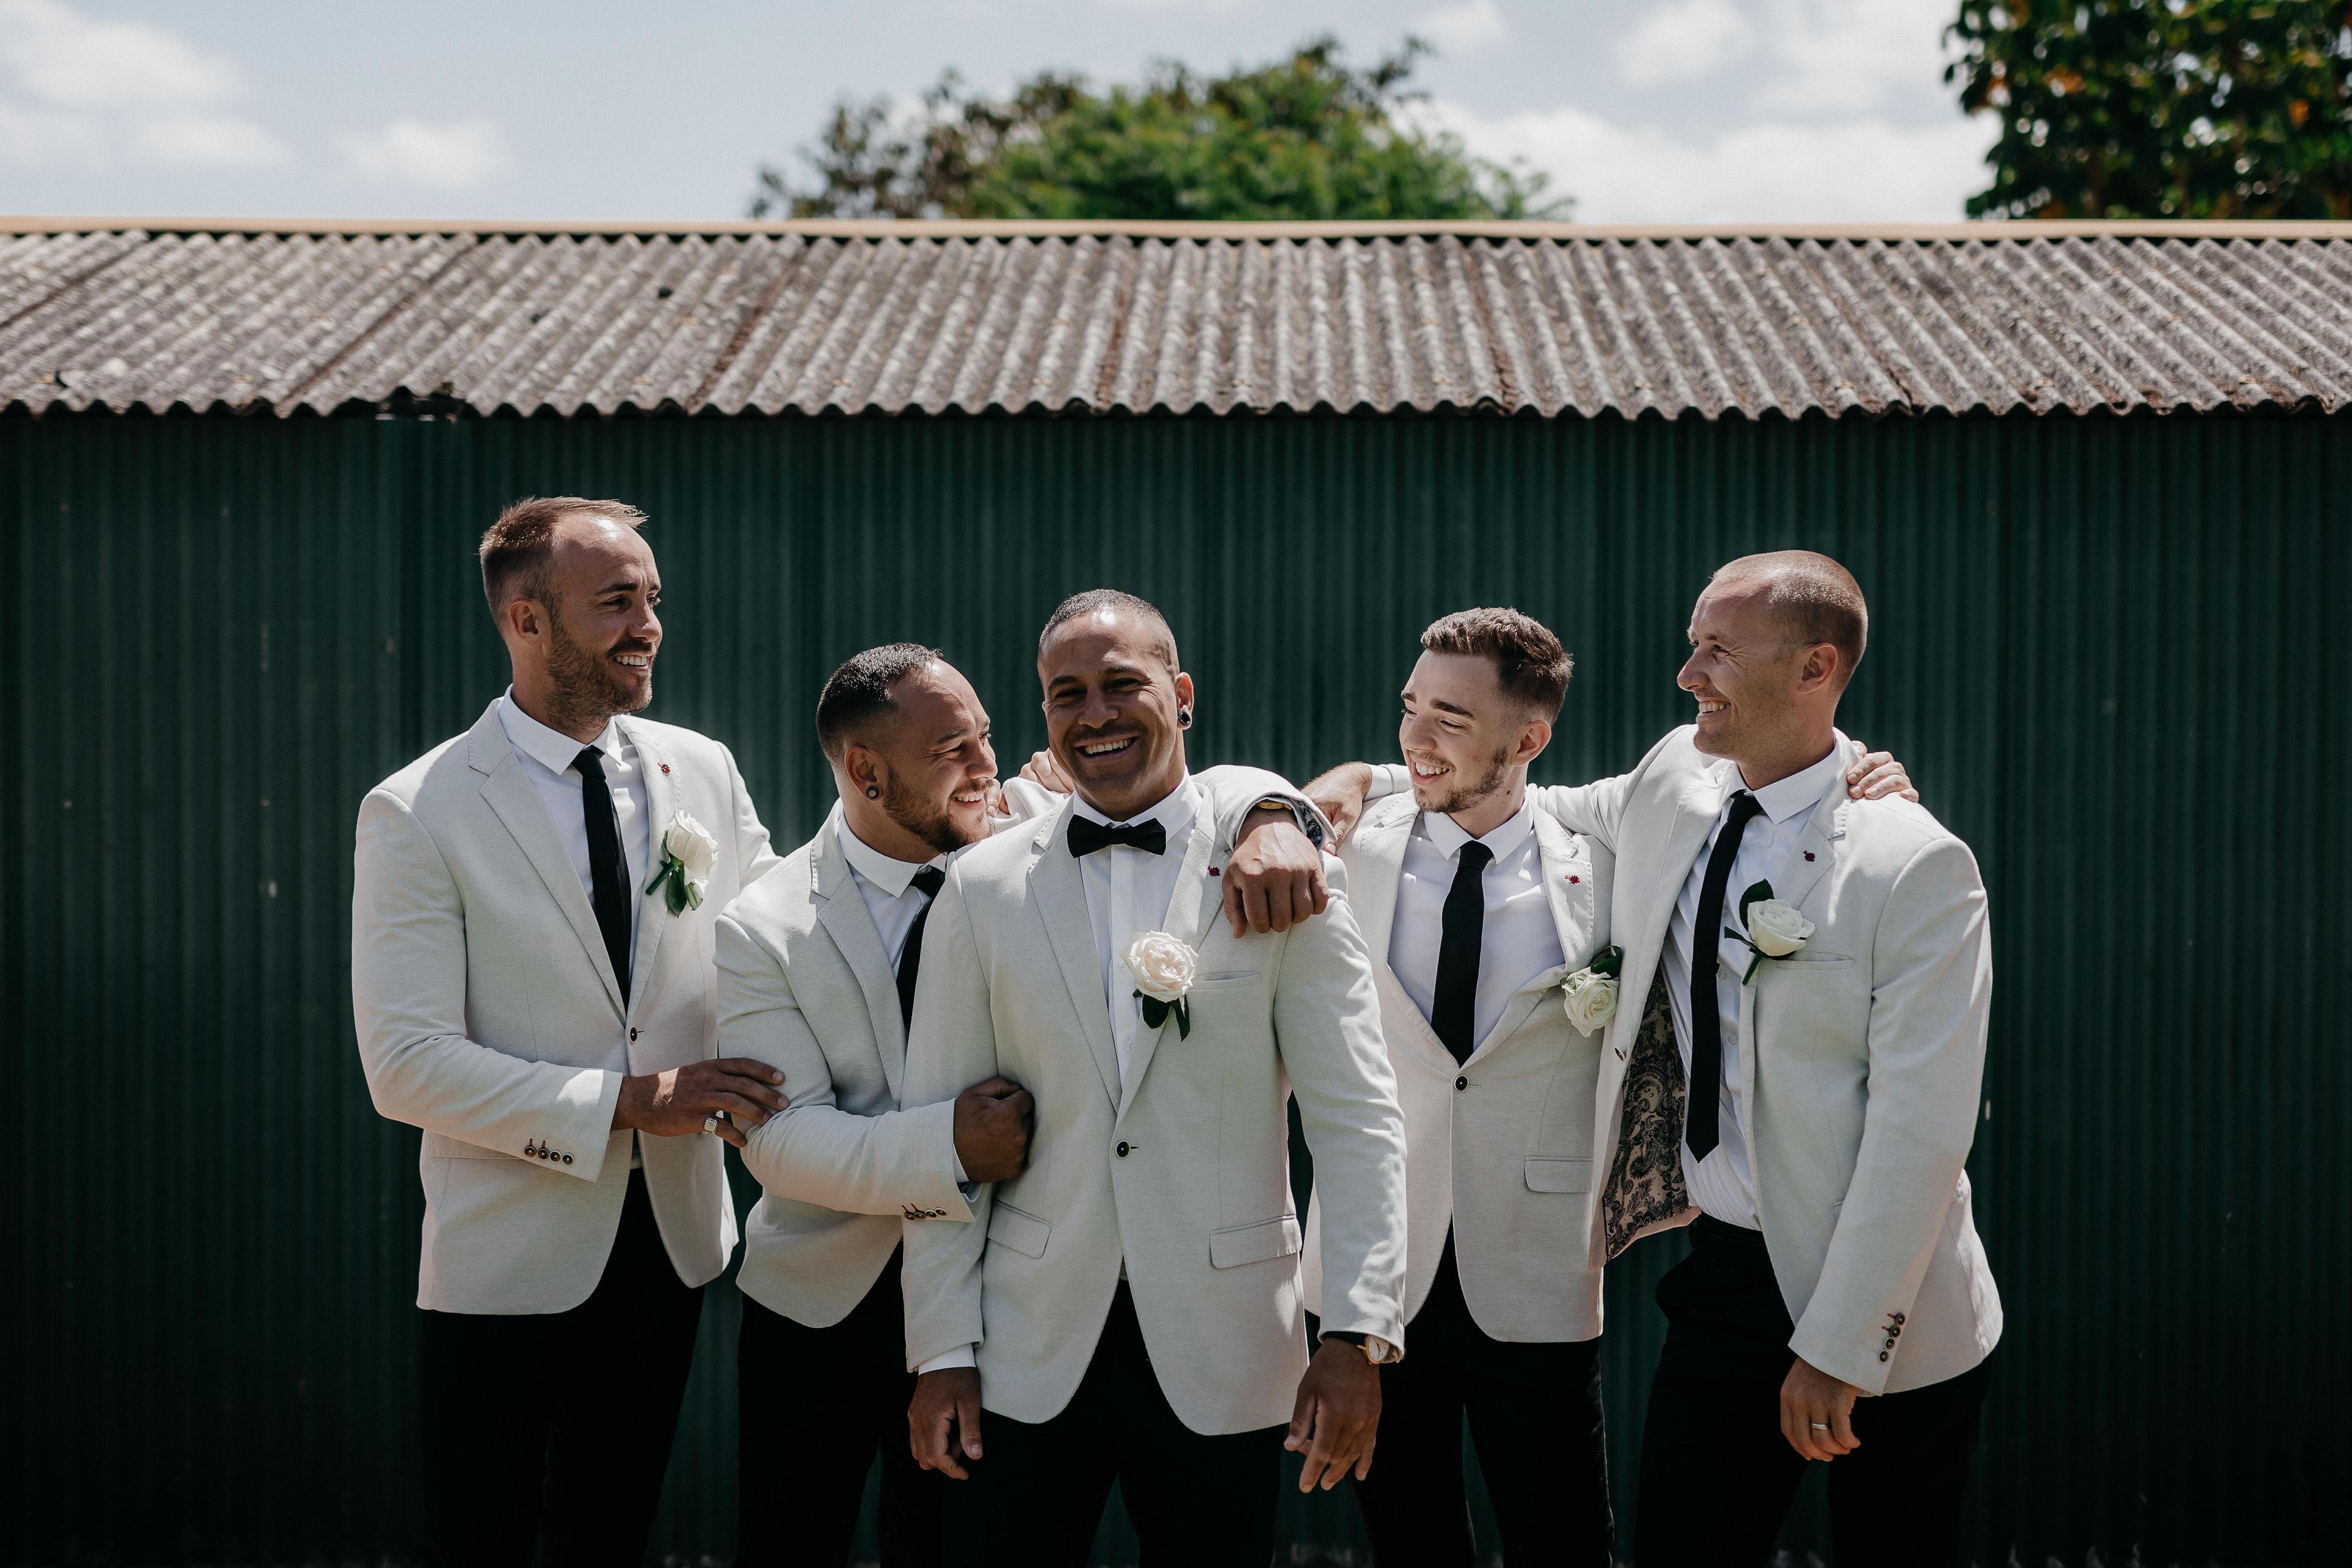 City wedding in Perth featuring groomsmen